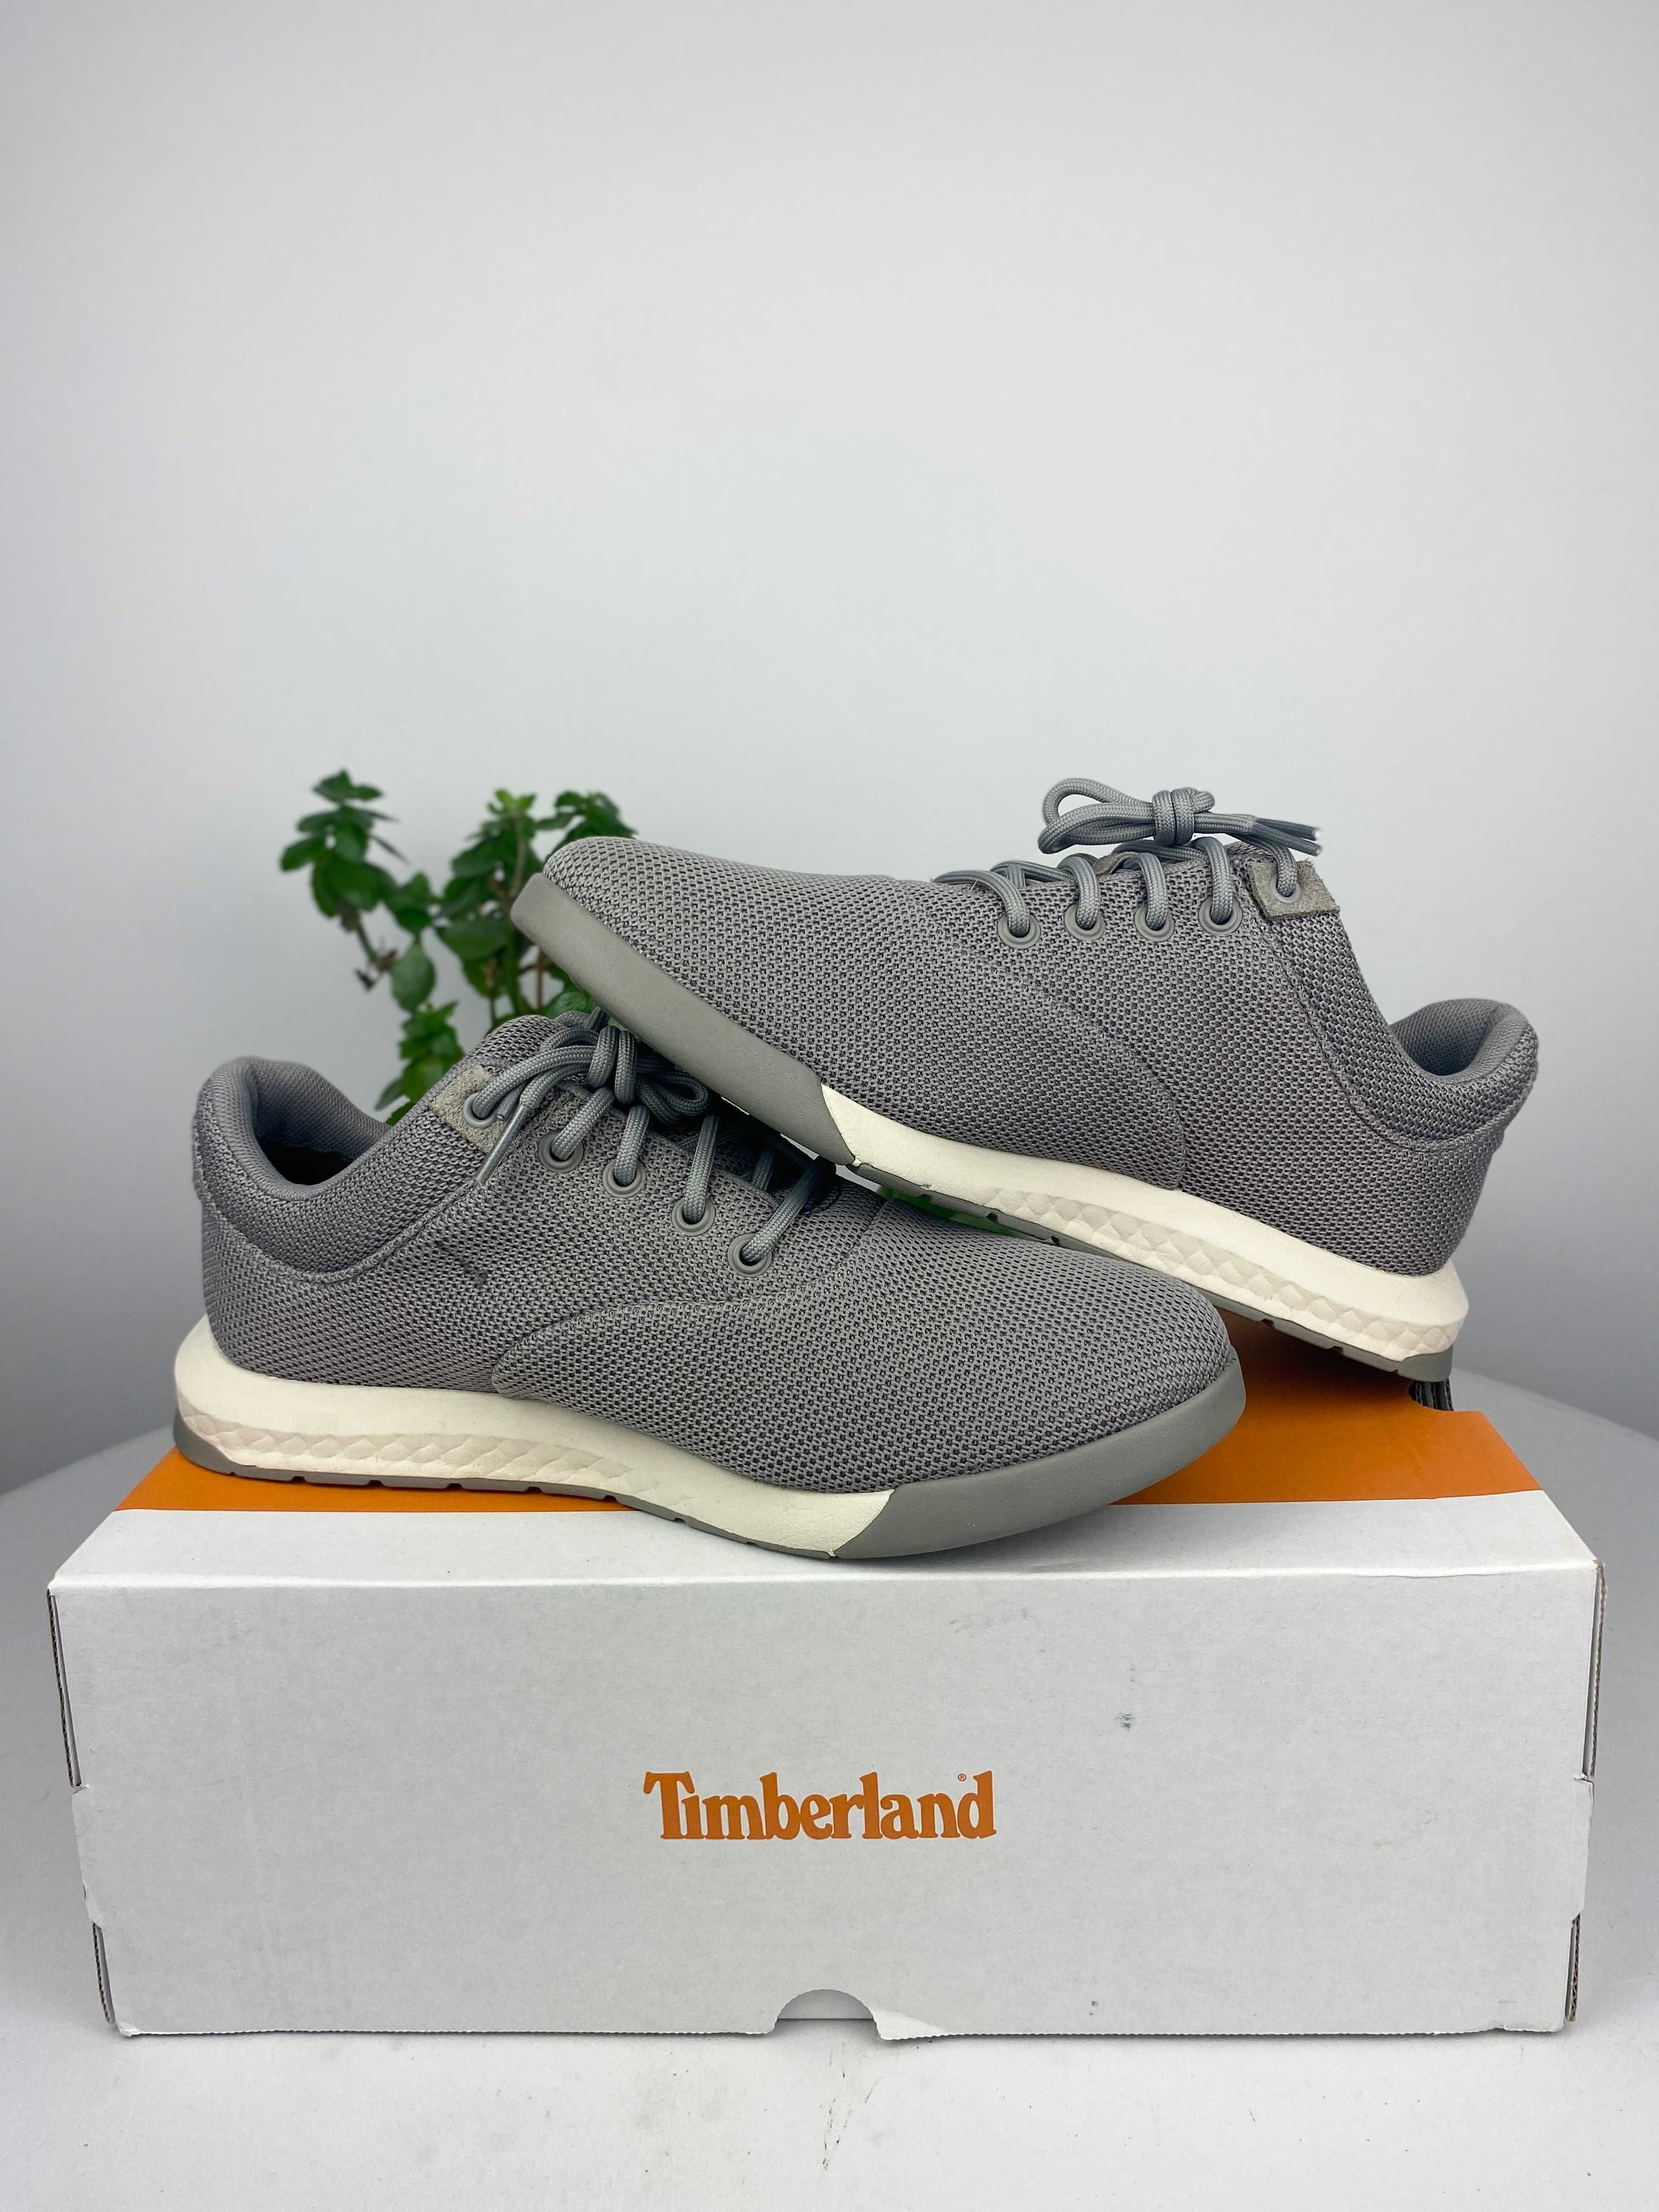 białe szare buty sneakersy timberland Killington Ultra Knit Ox r41 n54